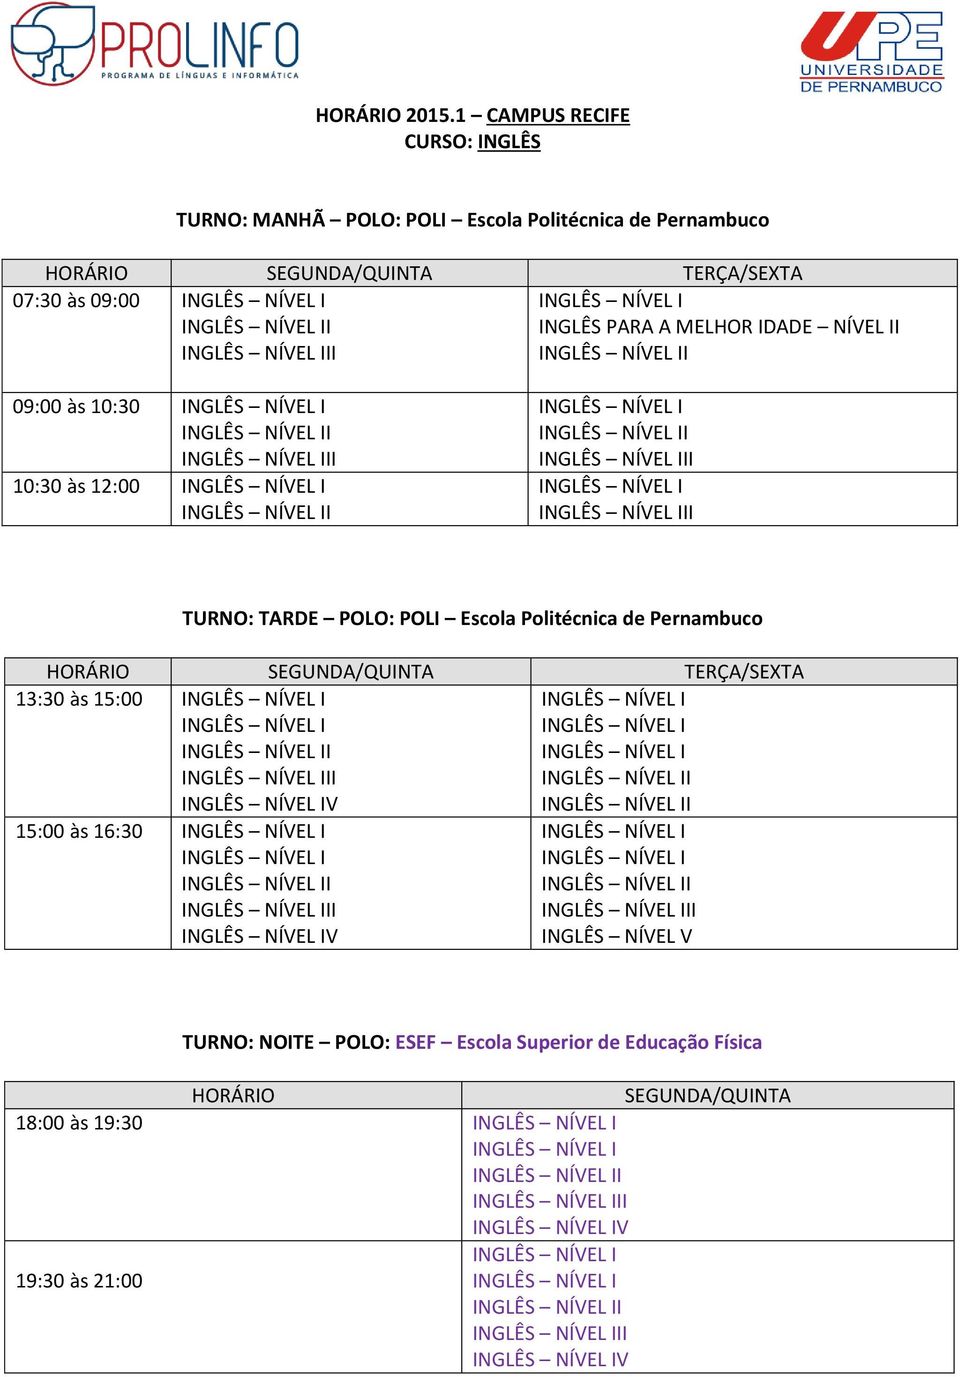 TURNO: TARDE POLO: POLI Escola Politécnica de Pernambuco TERÇA/SEXTA 13:30 às 15:00 I II V I I 15:00 às